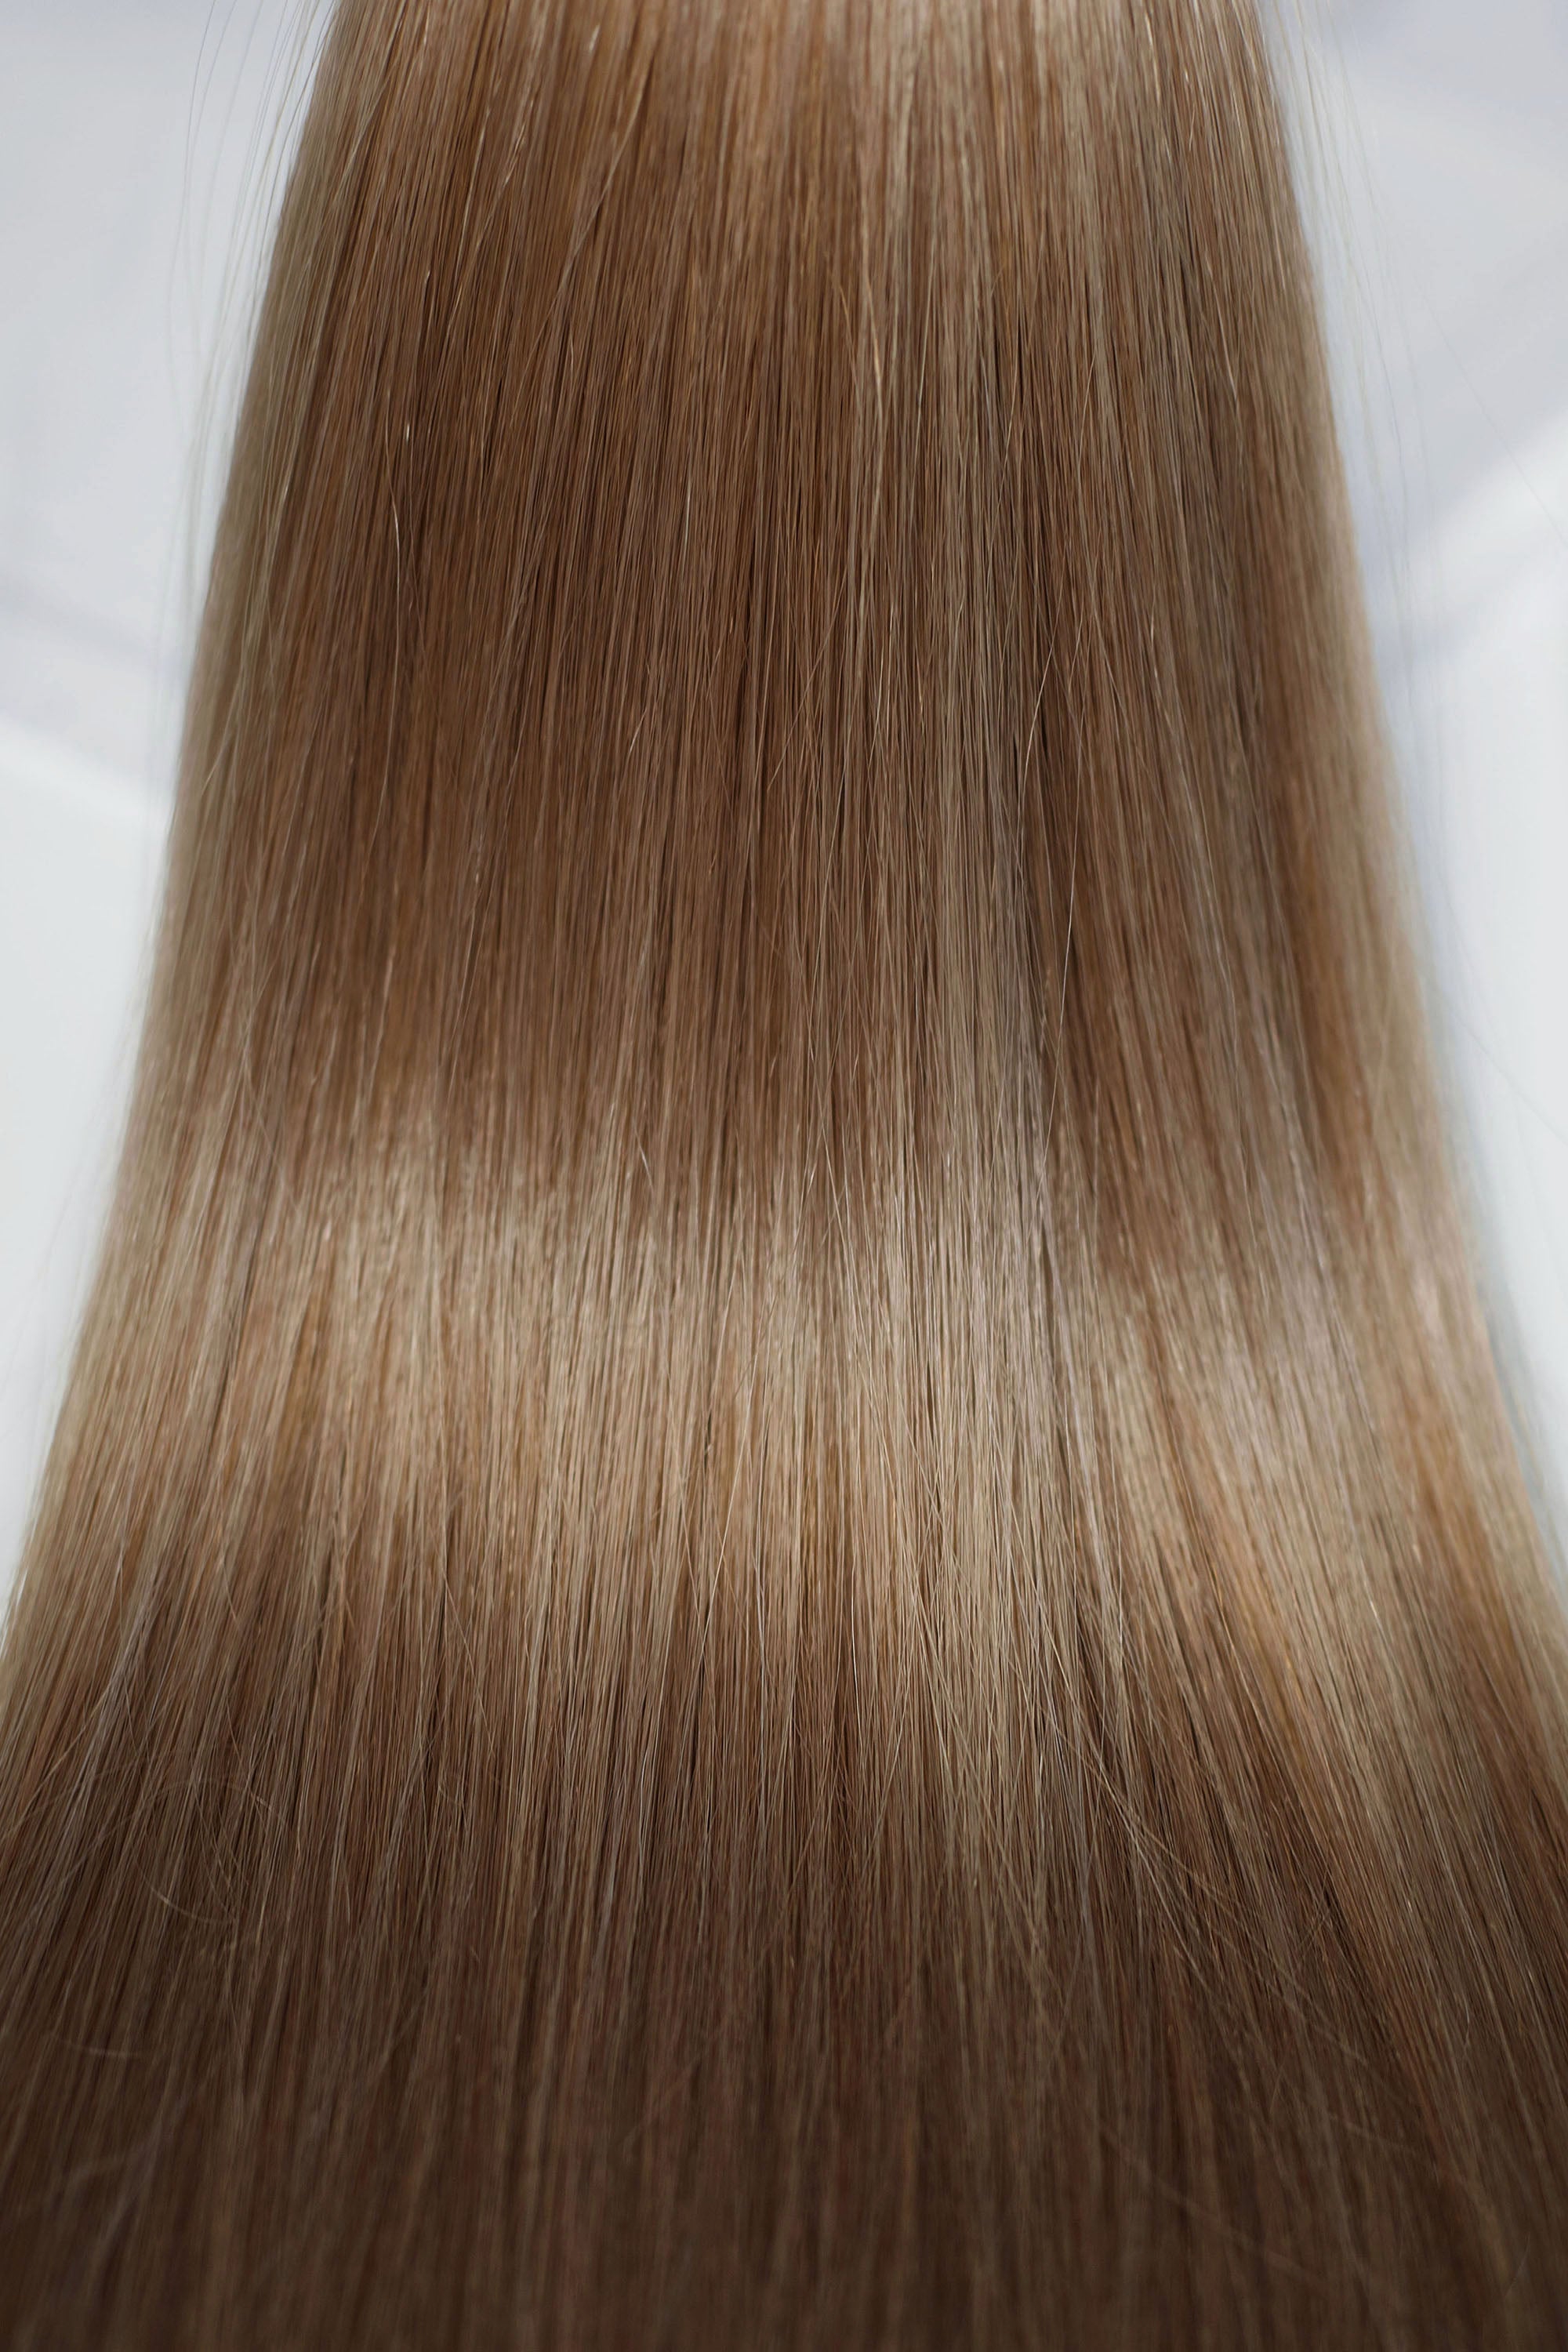 Behair professional Keratin Tip "Premium" 18" (45cm) Natural Straight  Light Ash Brown #10 - 25g (Standart - 0.7g each pcs) hair extensions